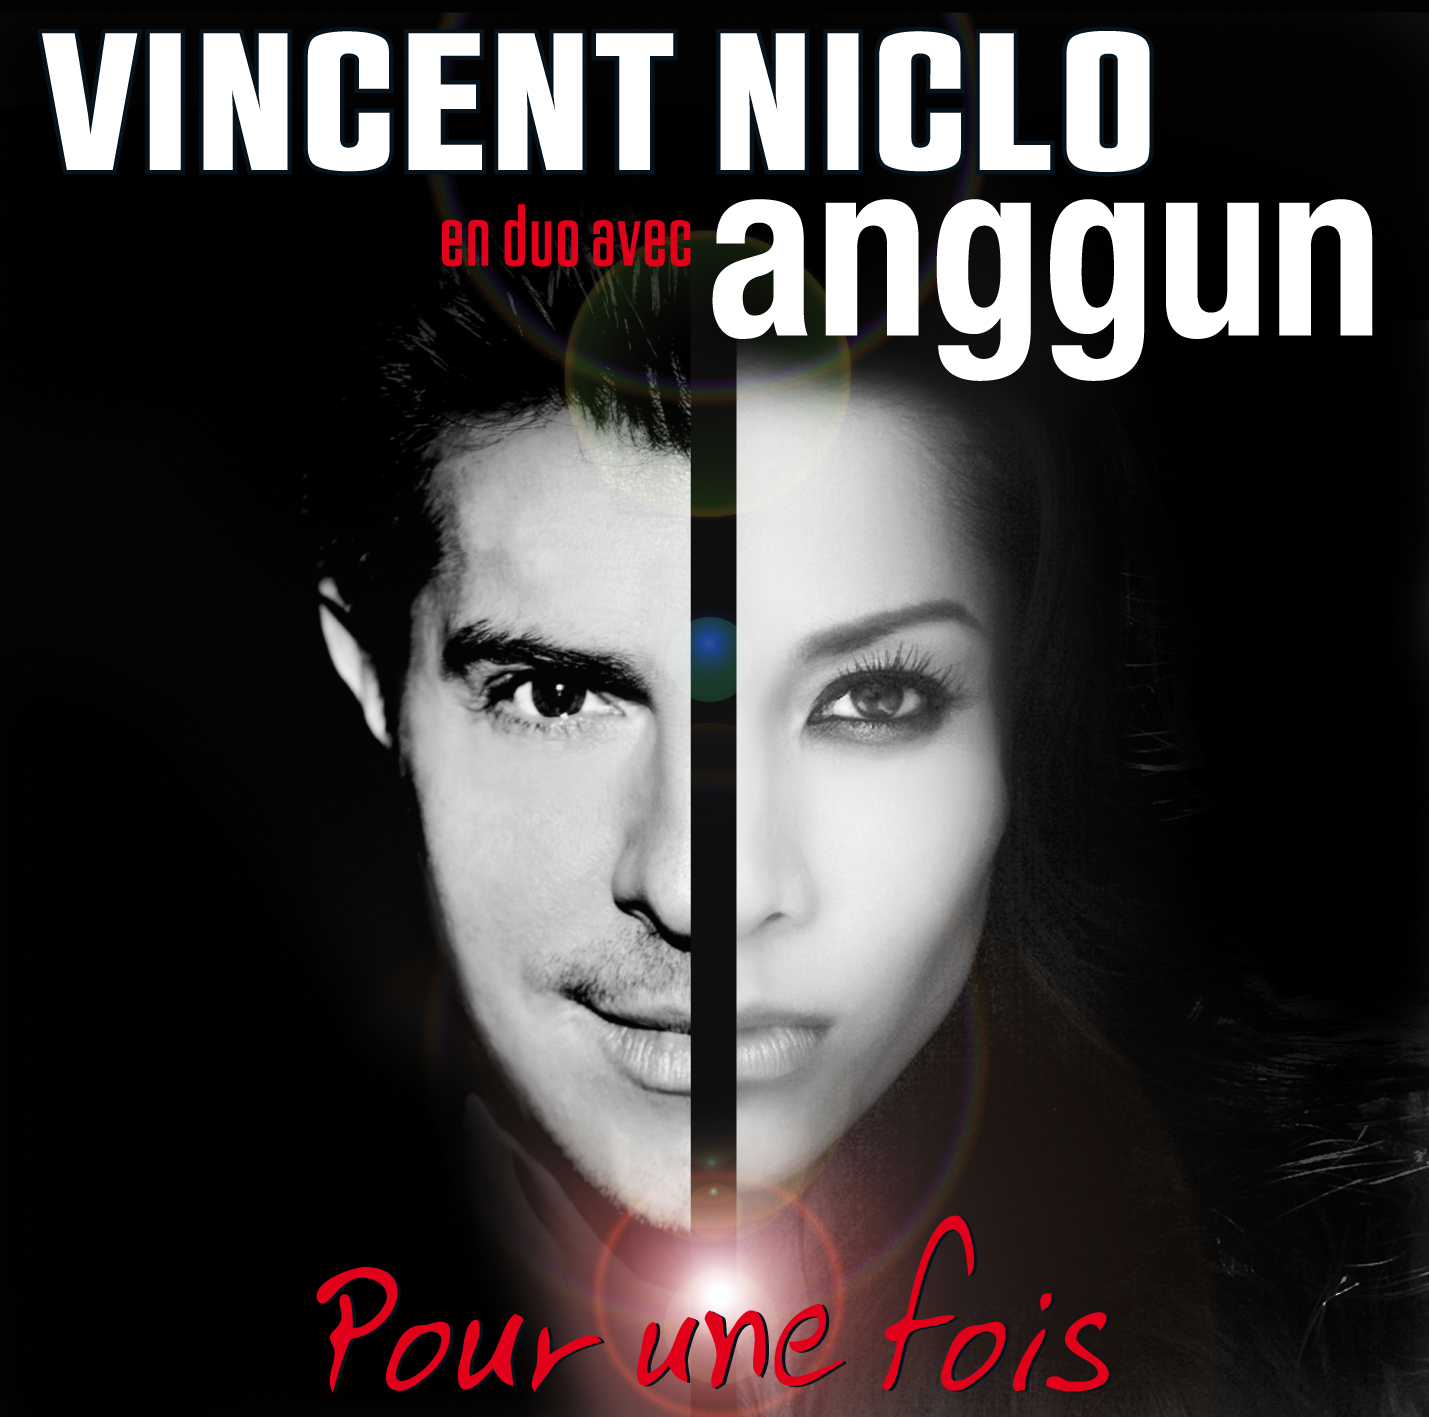 Vincent Niclo et Anggun : Un duo explosif